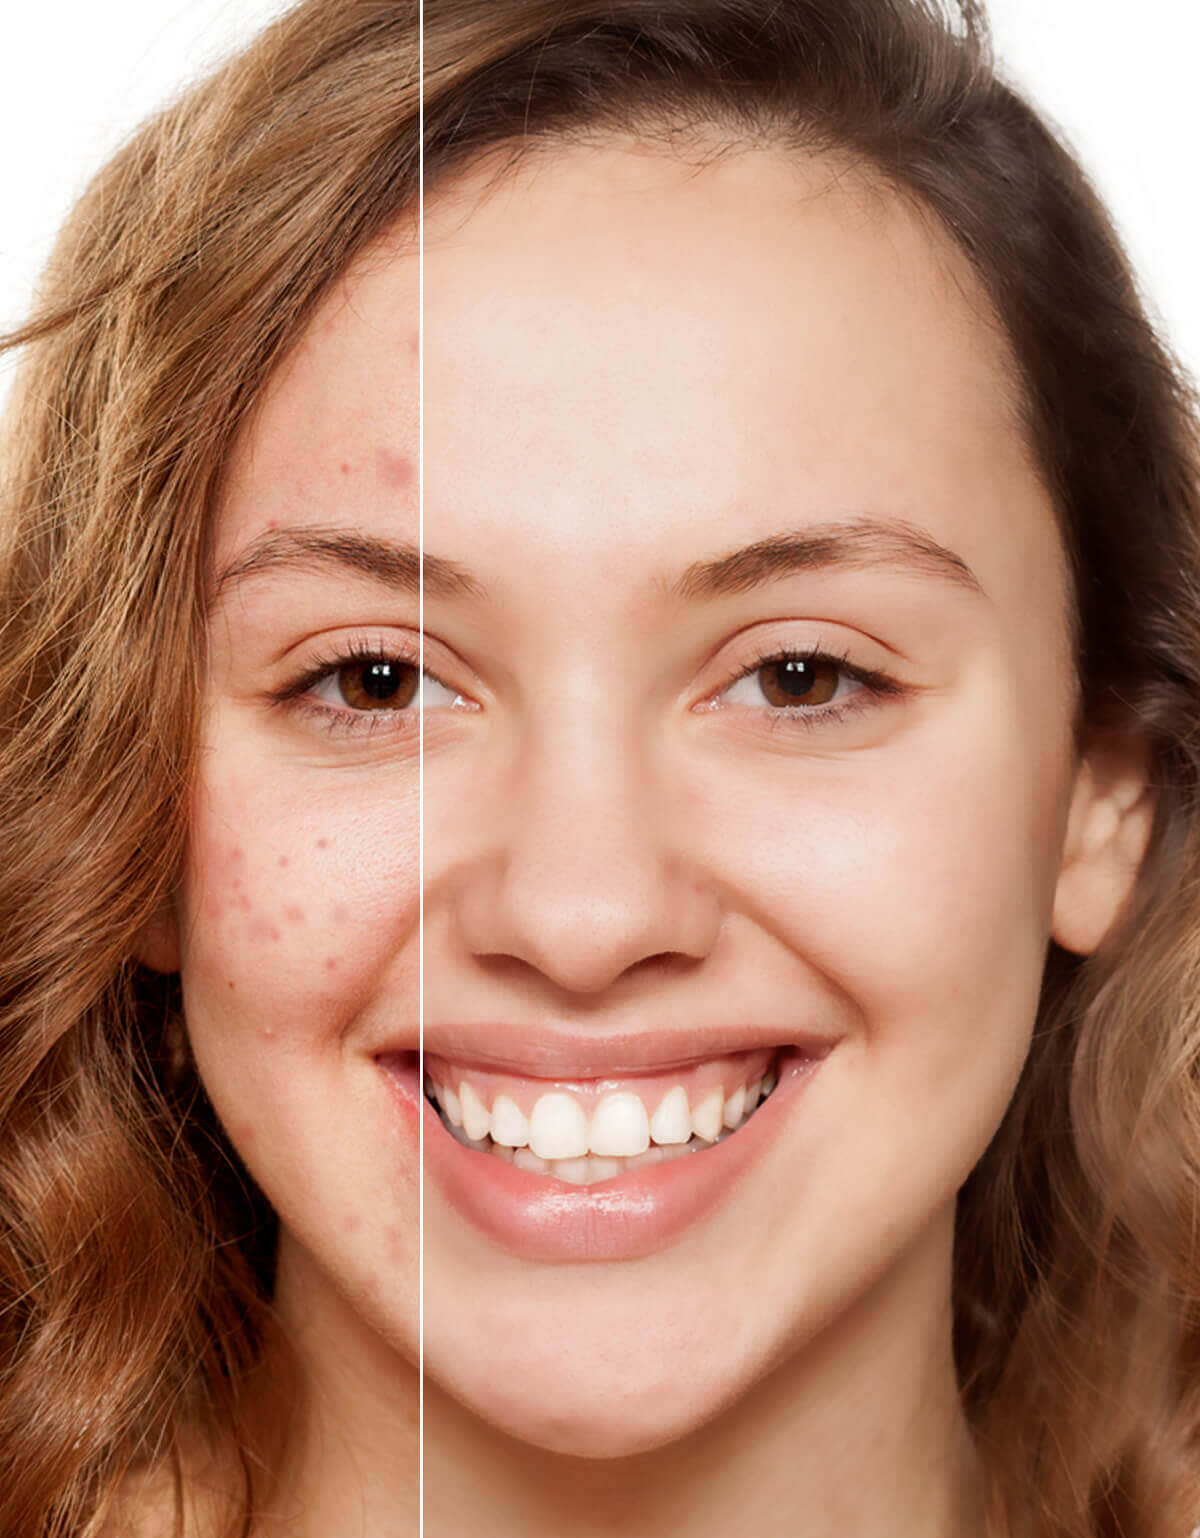 Makeup Tips That Work On Digital Images